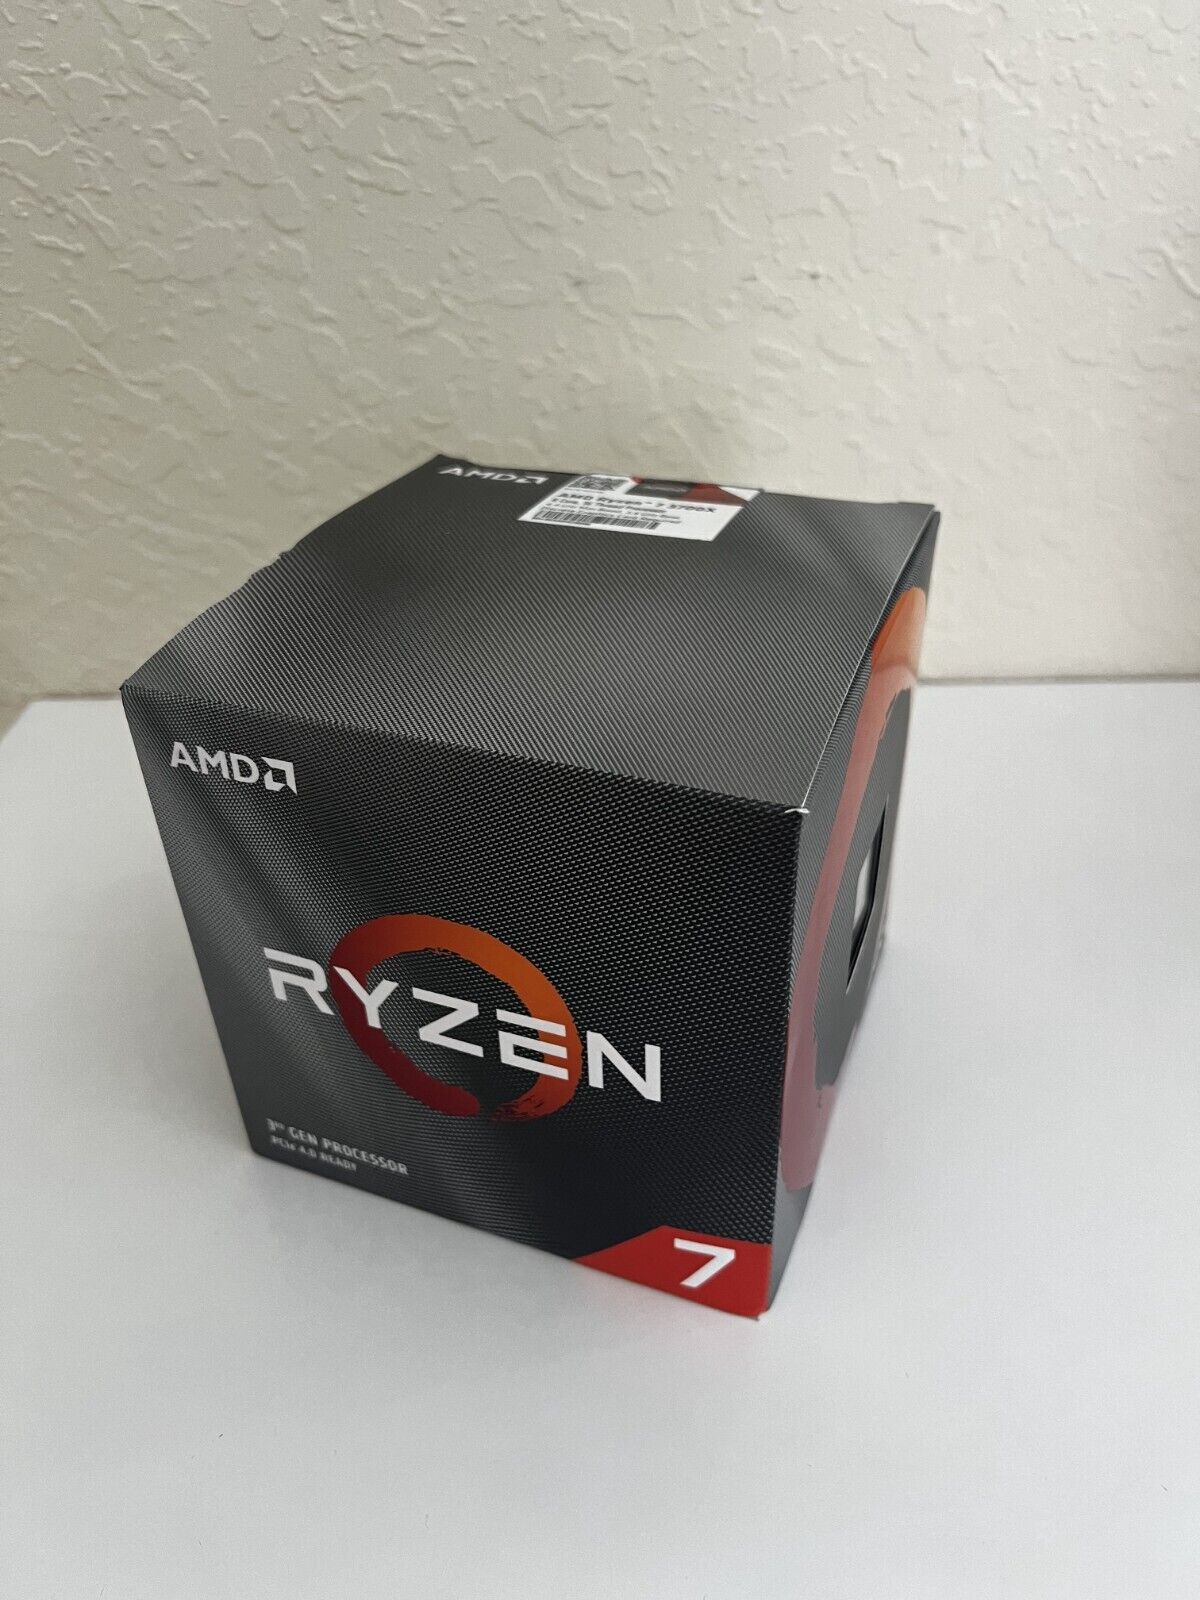 AMD Ryzen 7 3700X (3.6GHz, 8 Cores, Socket AM4) - 100-100000071BOX